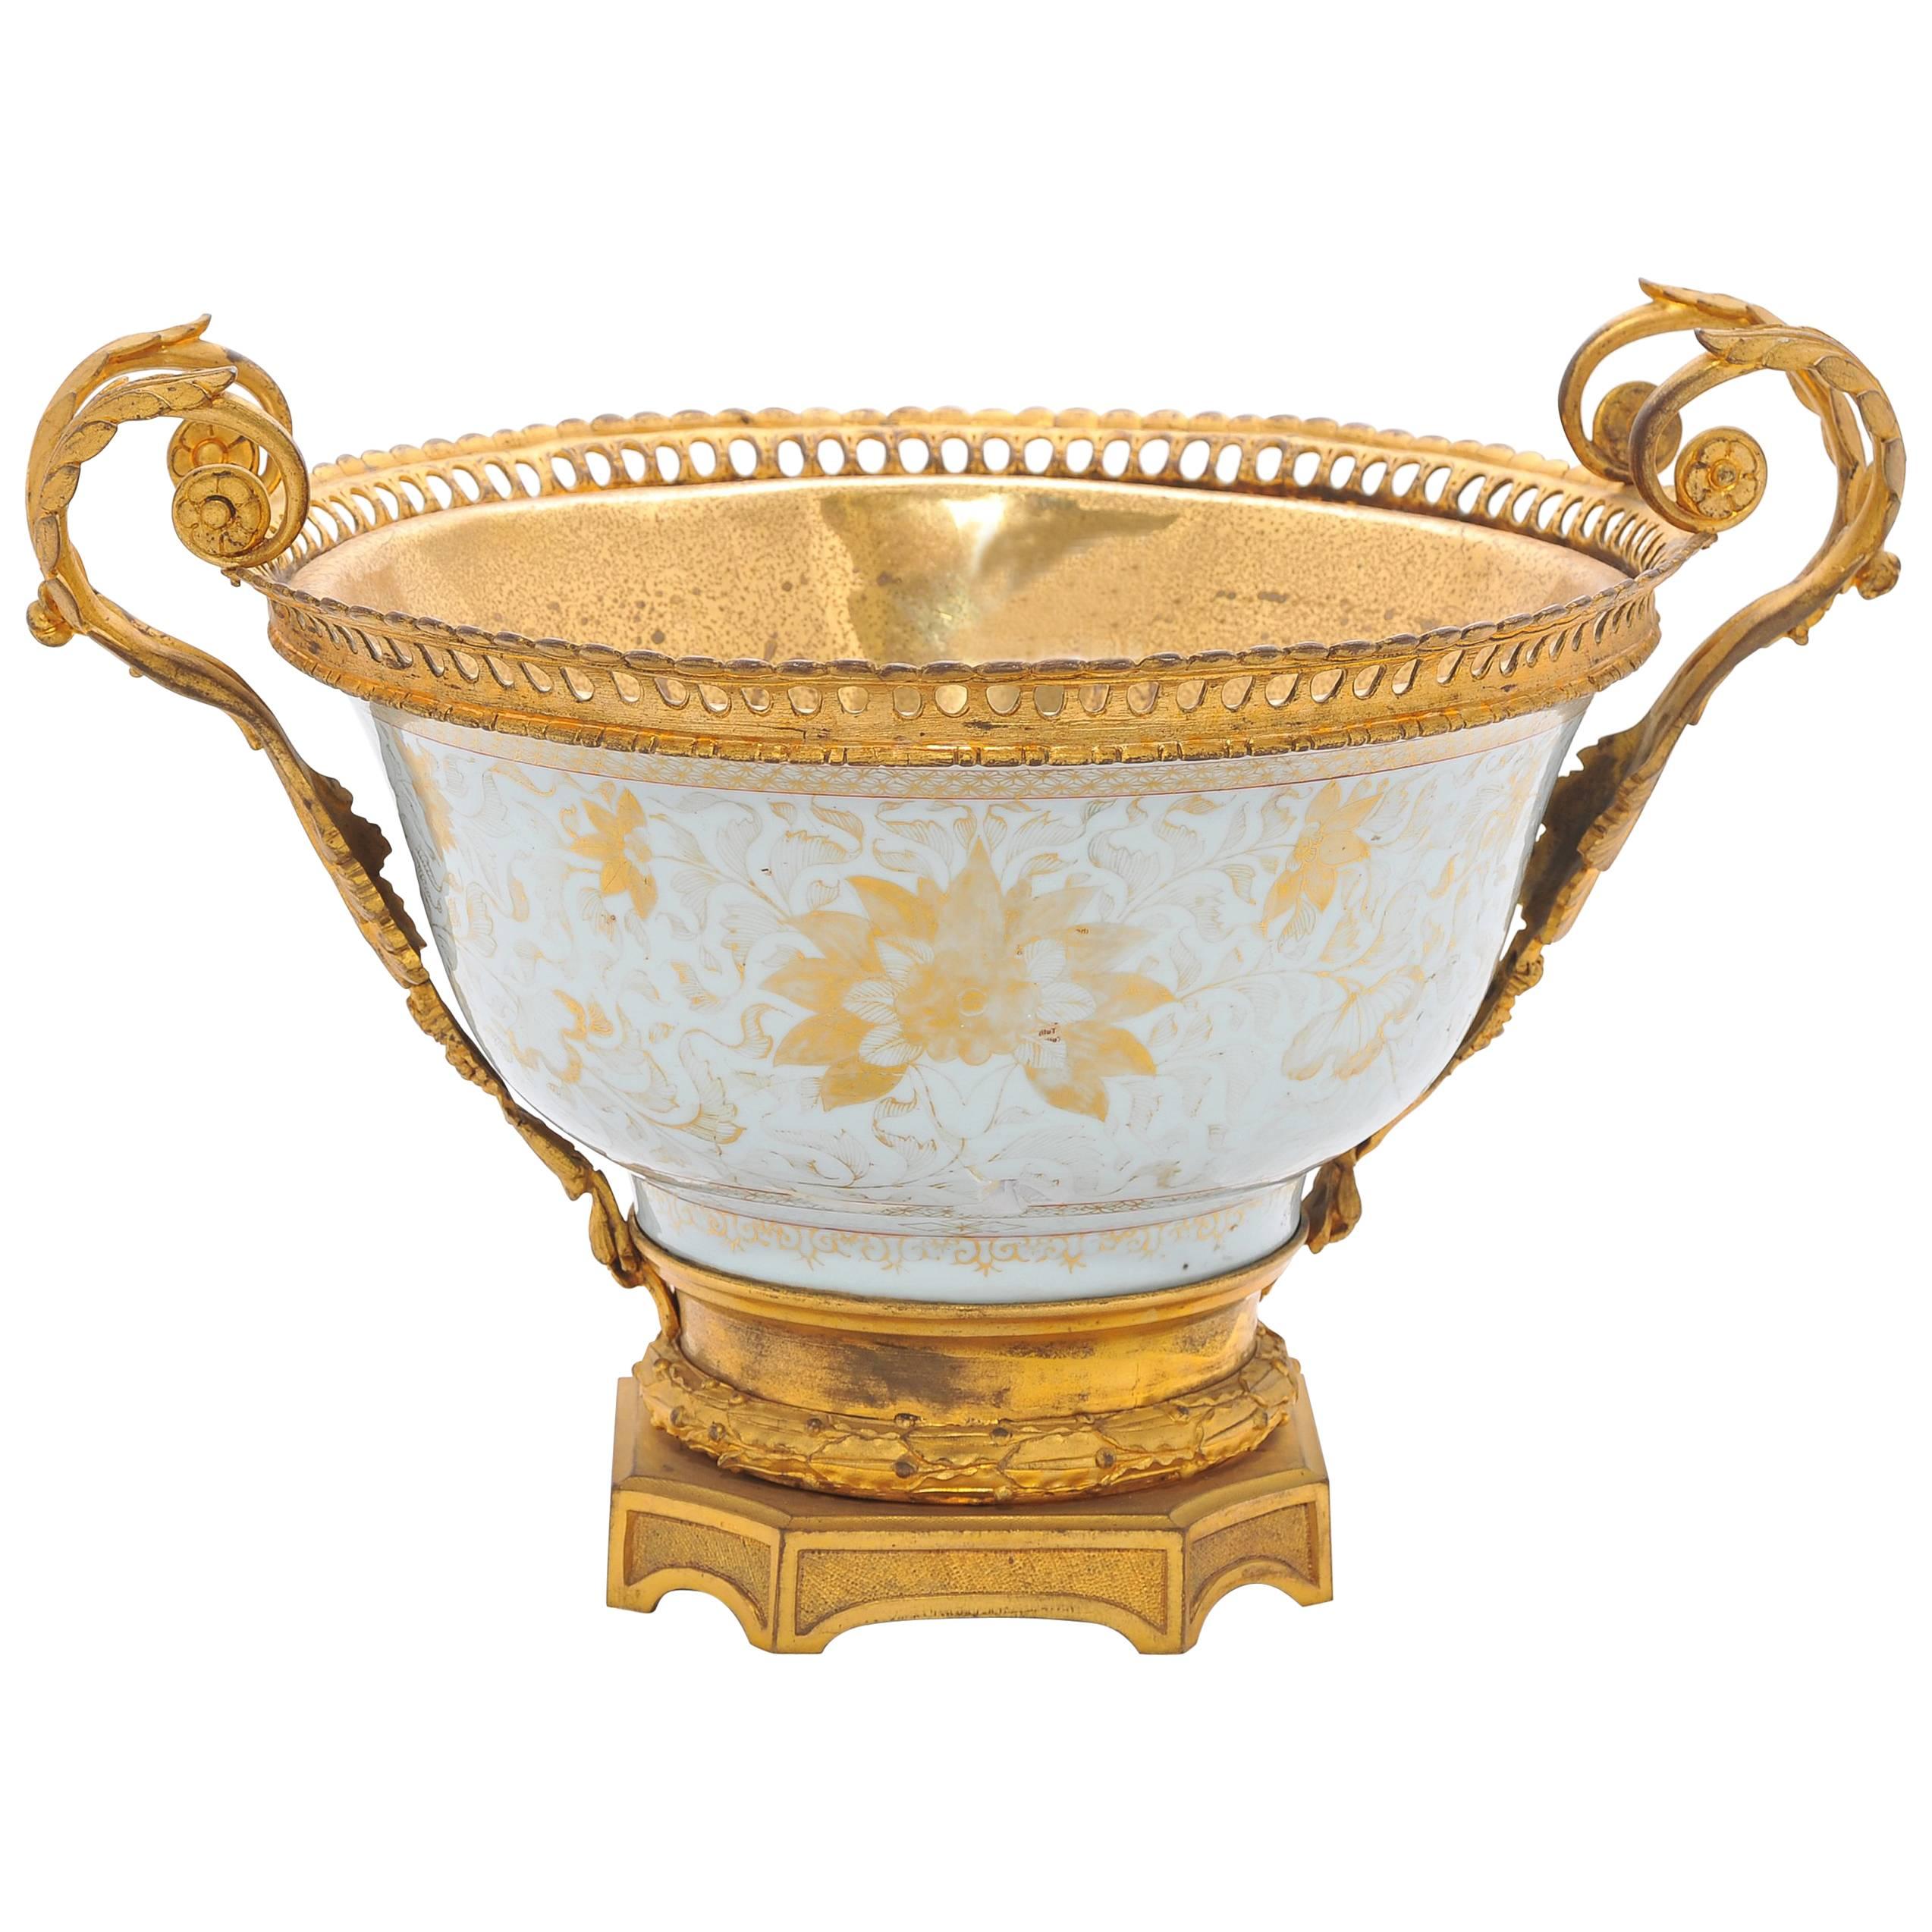 18th Century Chinese Export Ormolu Mounted Bowl